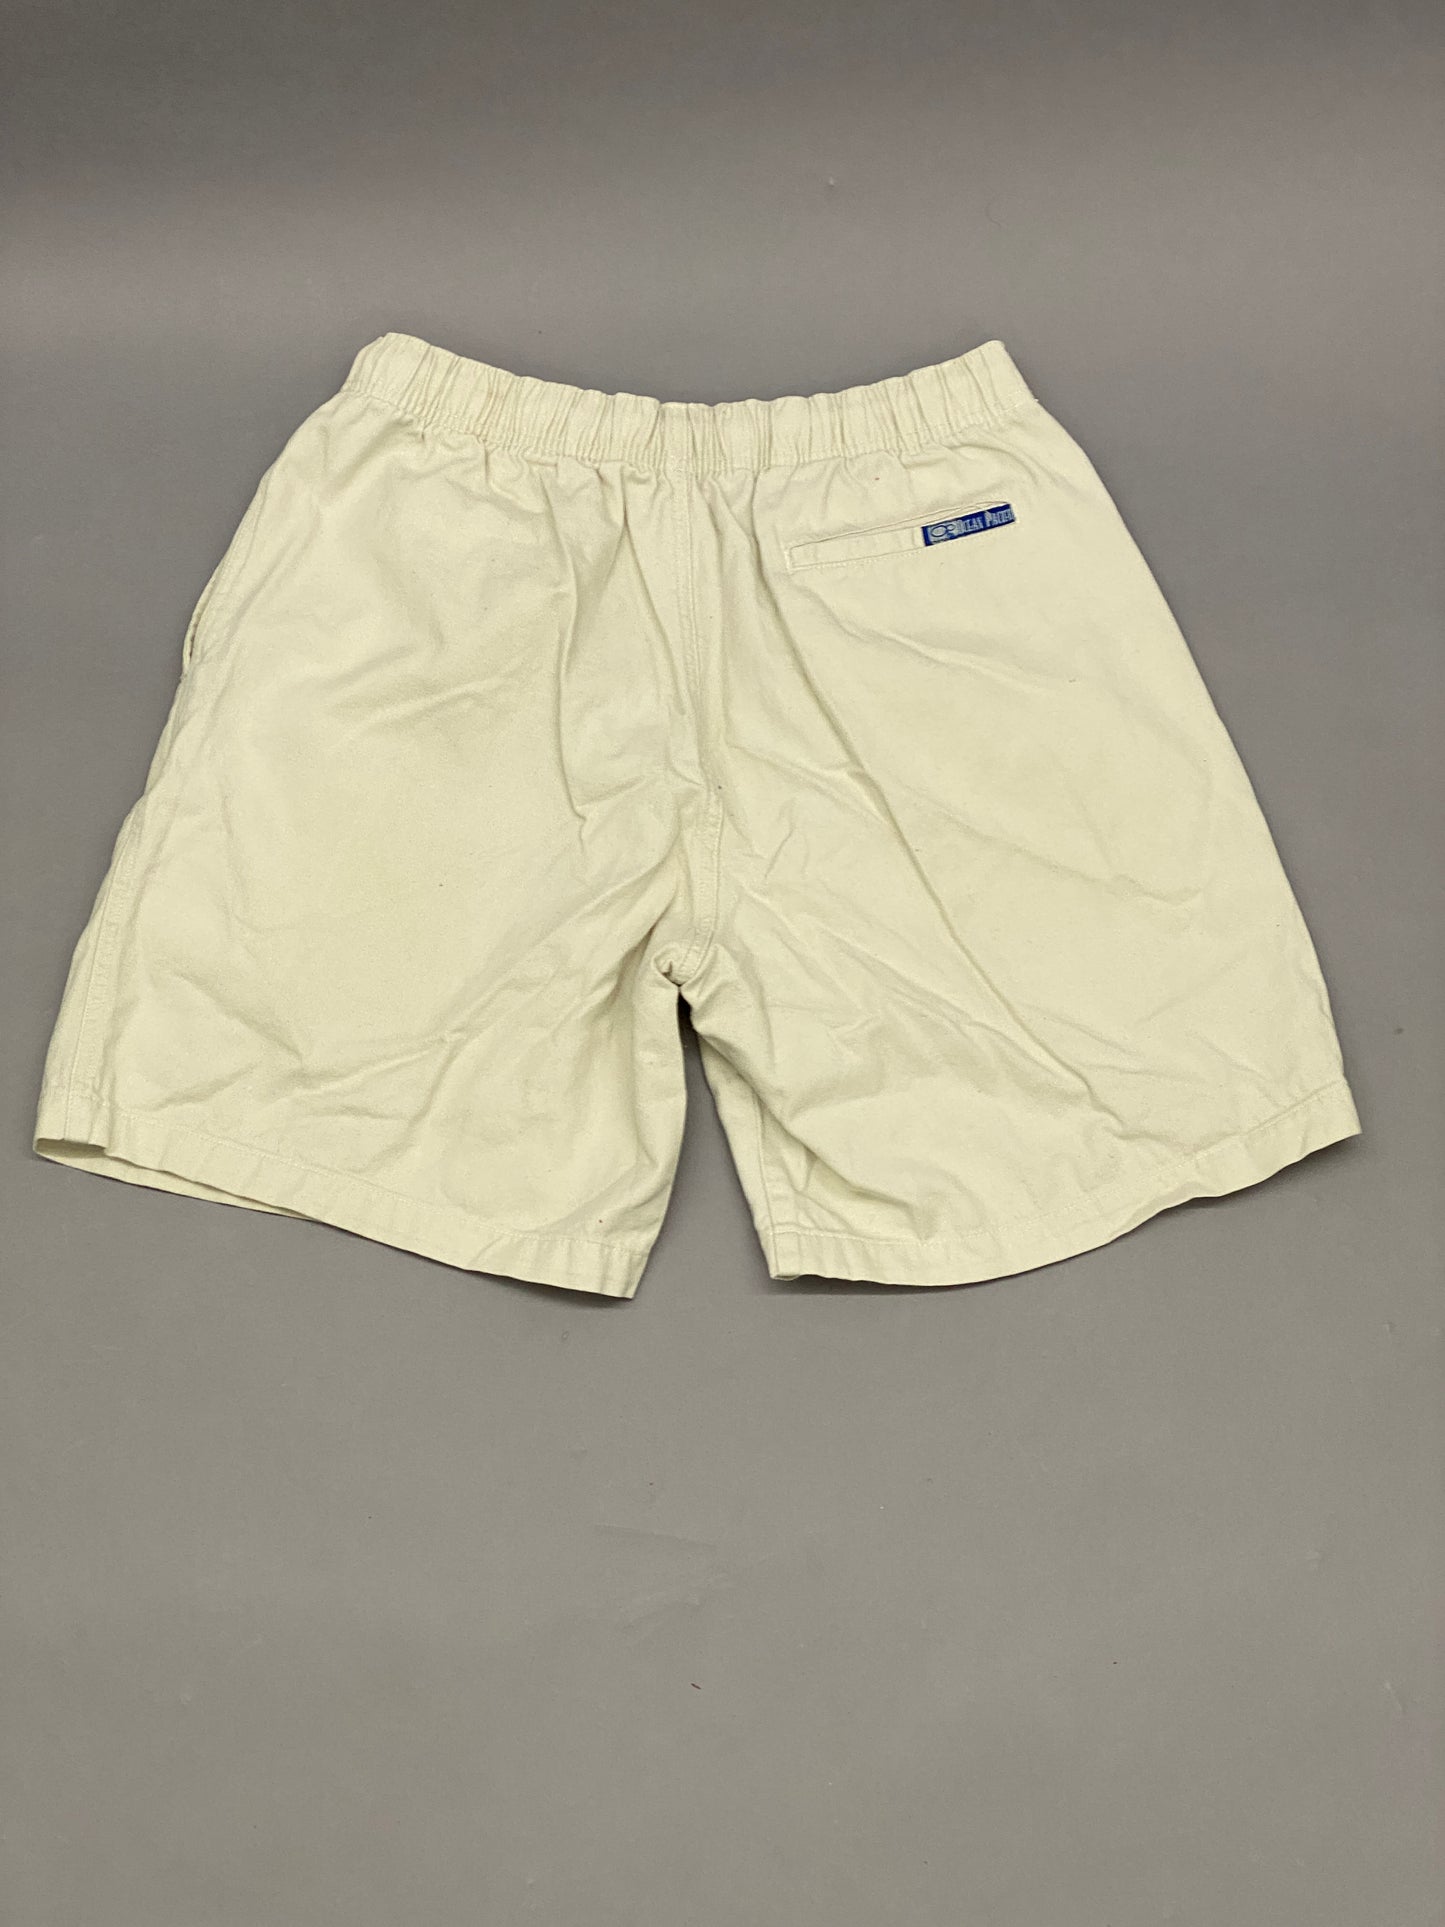 Ocean Pacific OP Vintage Shorts - L